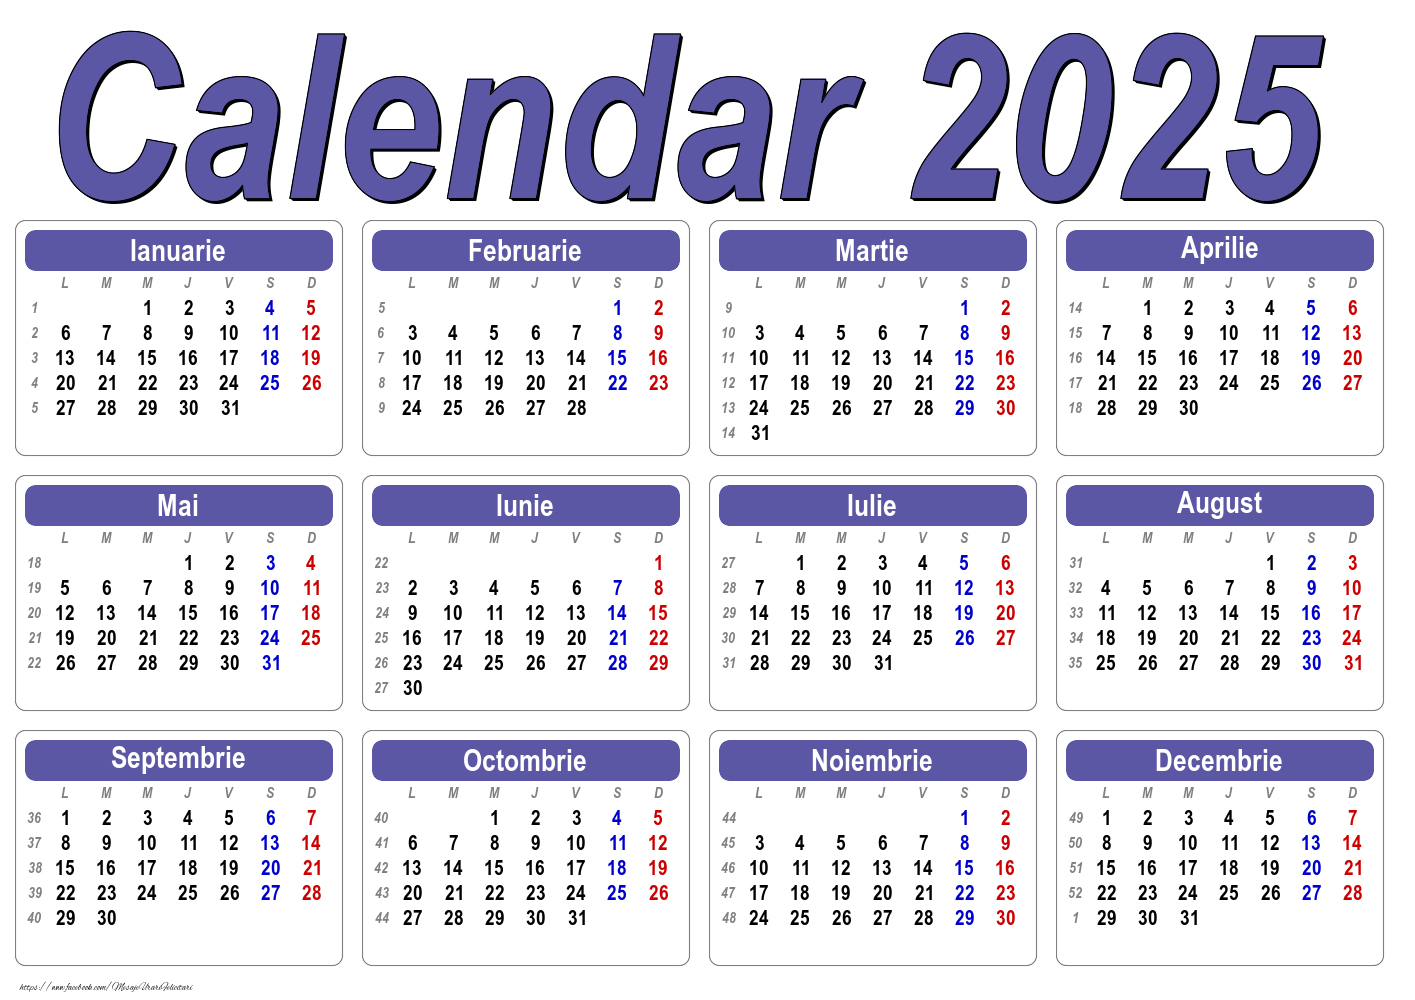 Imagini cu calendare - Calendar 2025 - Clasic - Model 0045 - mesajeurarifelicitari.com